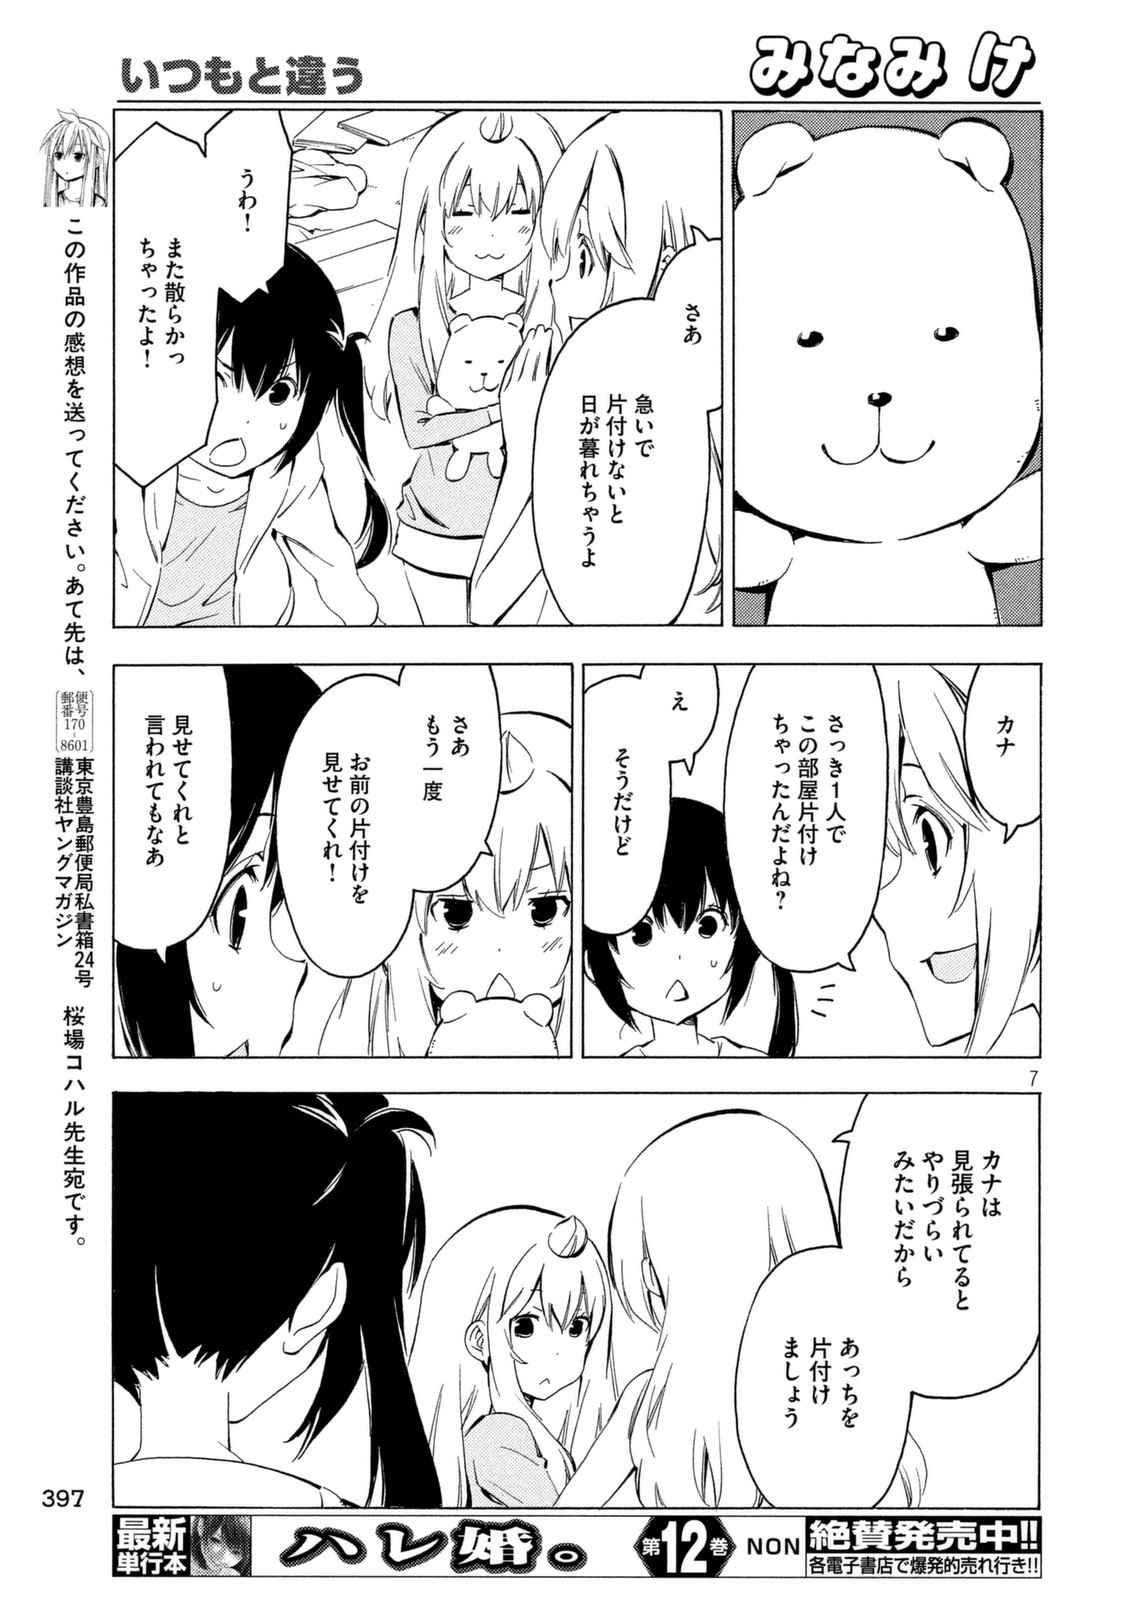 Minami-ke - Chapter 319 - Page 7